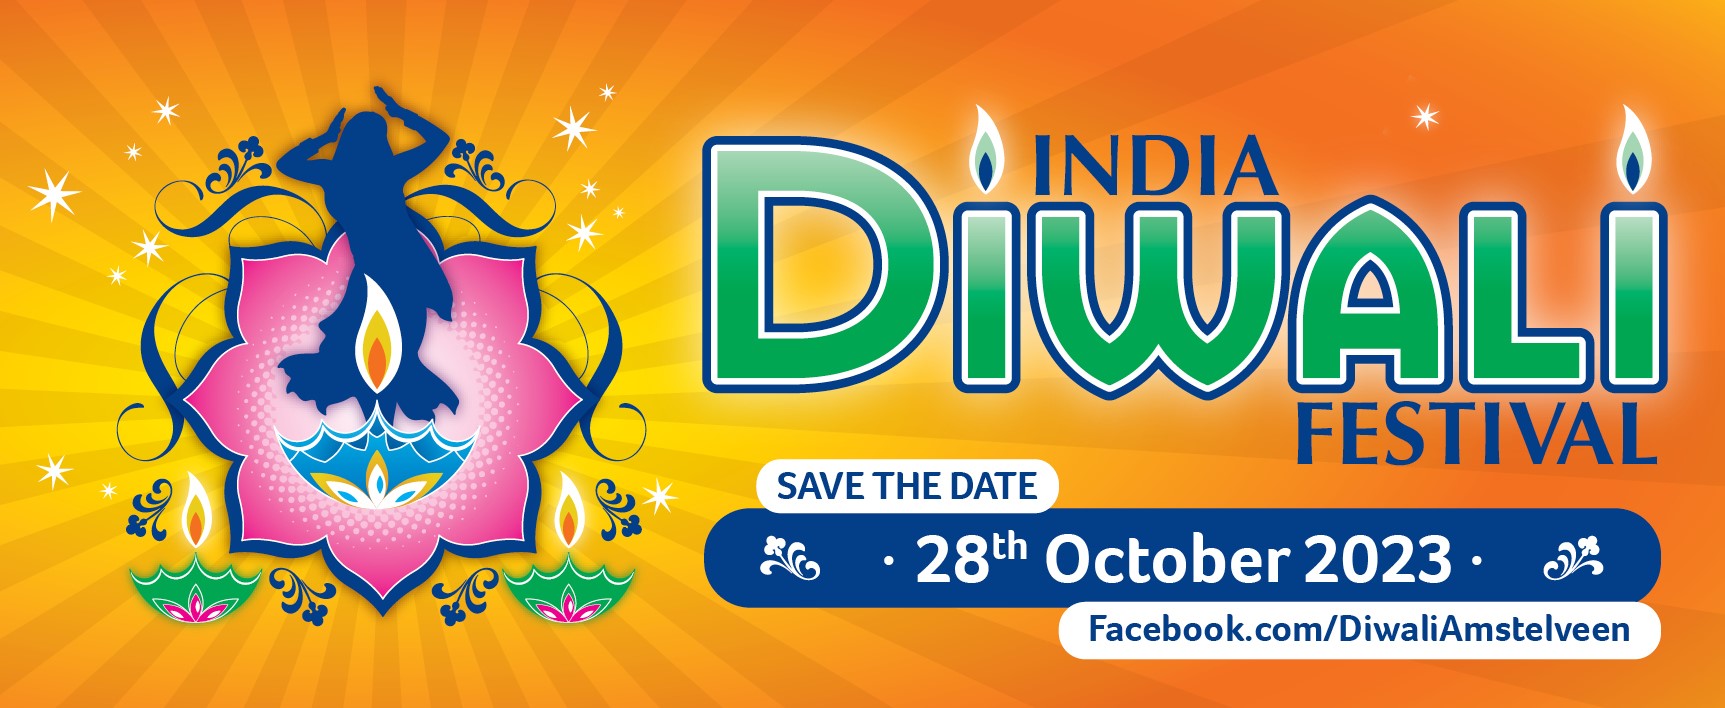 Save the Date Diwali 28.10.2023